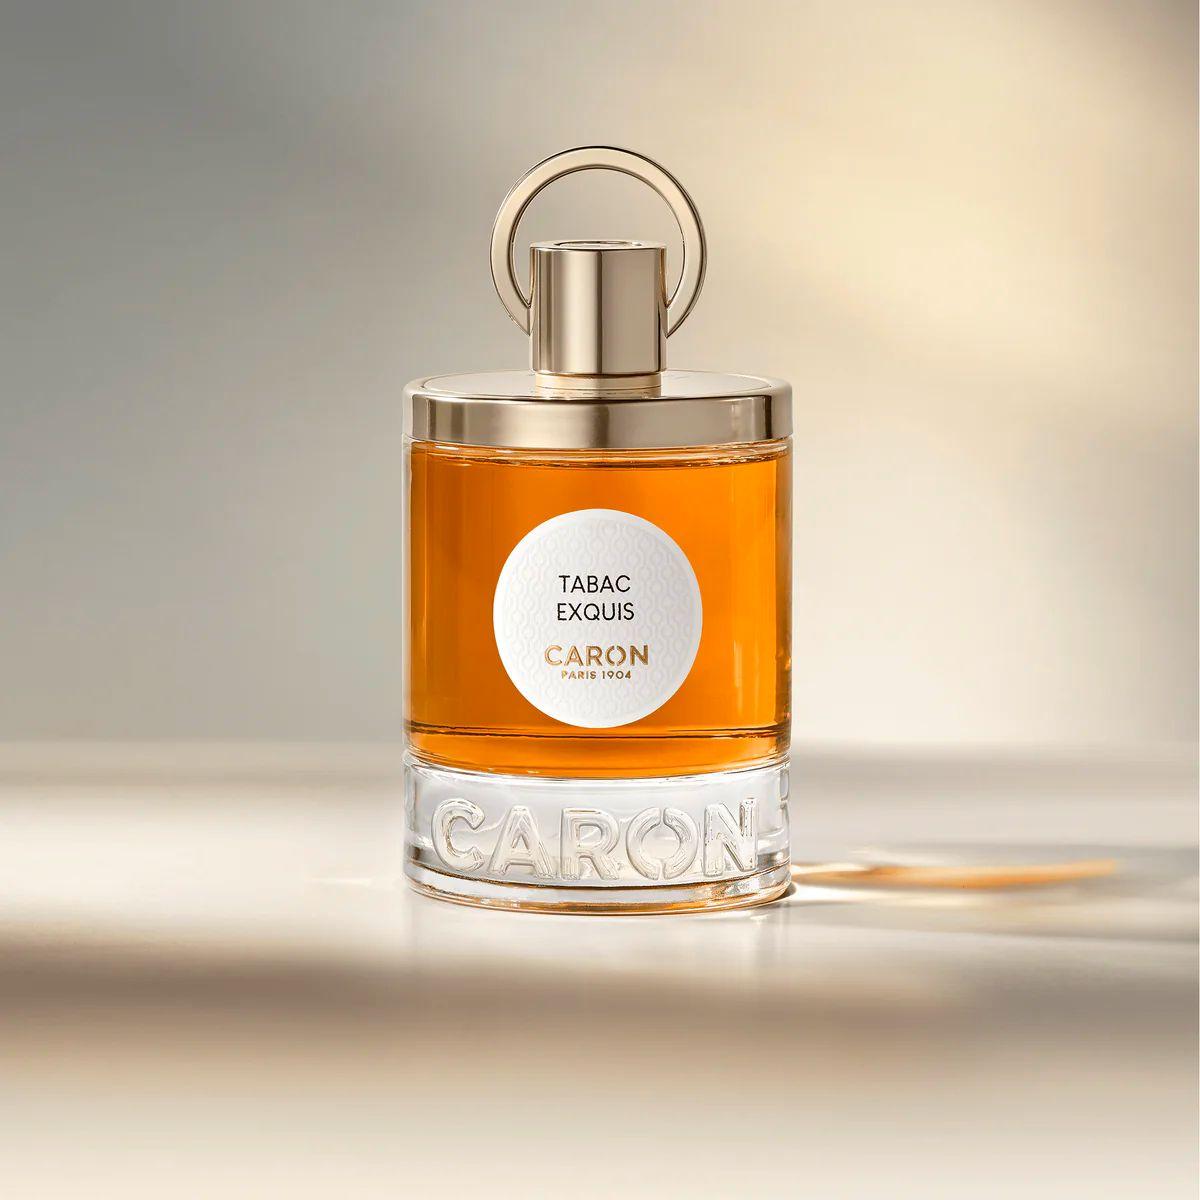 Caron - Tabac Exquis 100 ml | Perfume Lounge